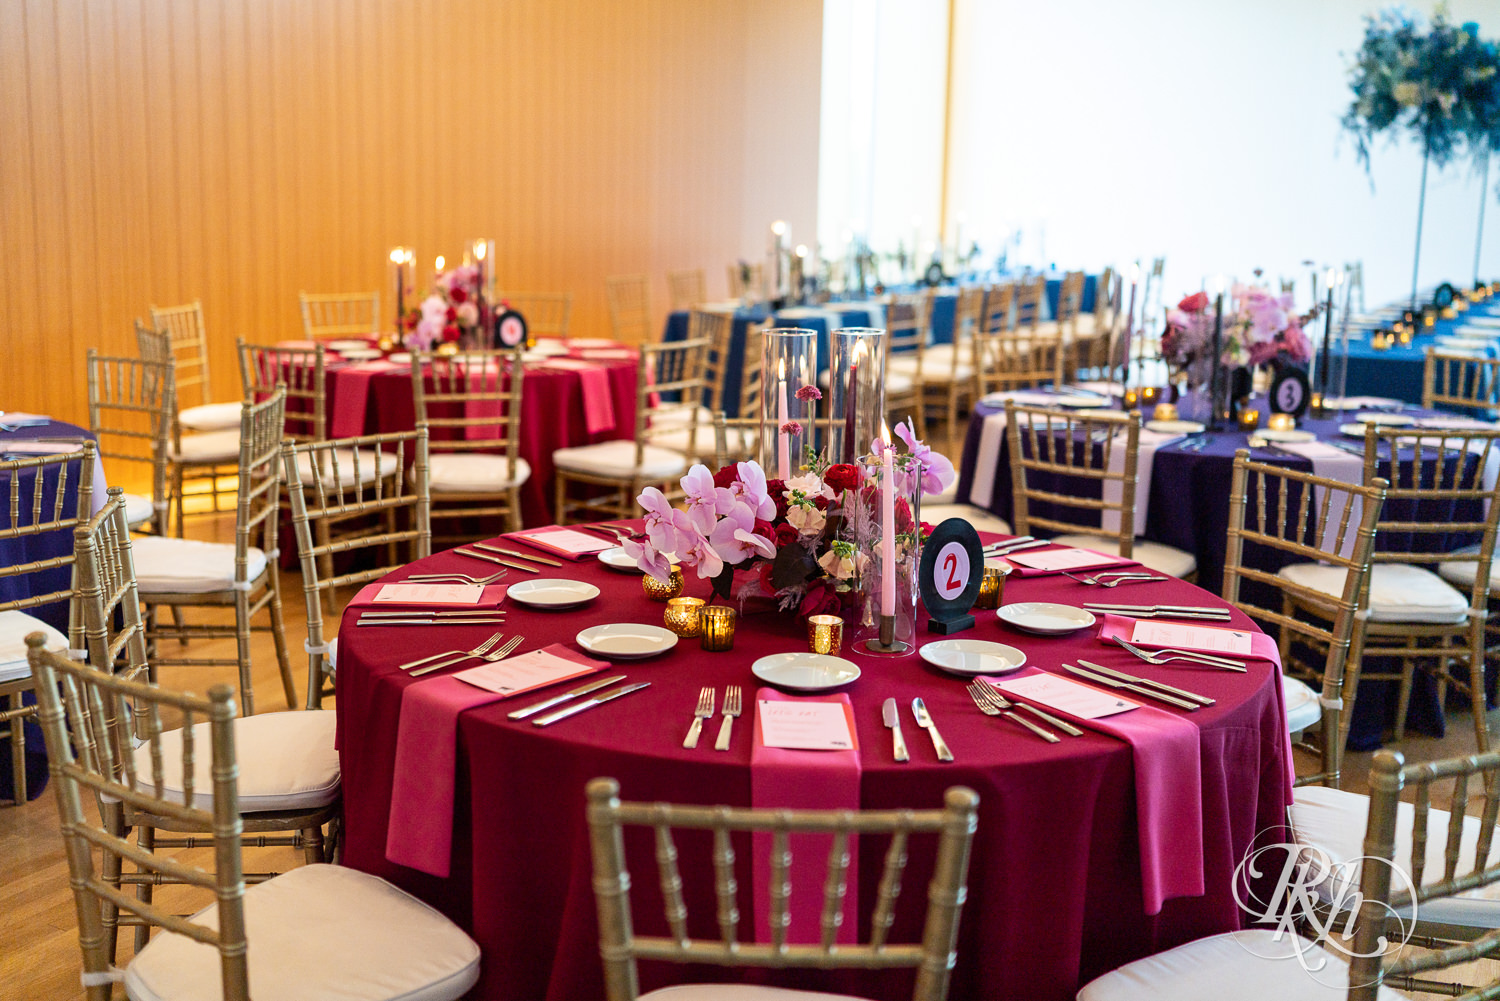 Wedding reception setup at the American Swedish Institute in Minneapolis, Minnesota.